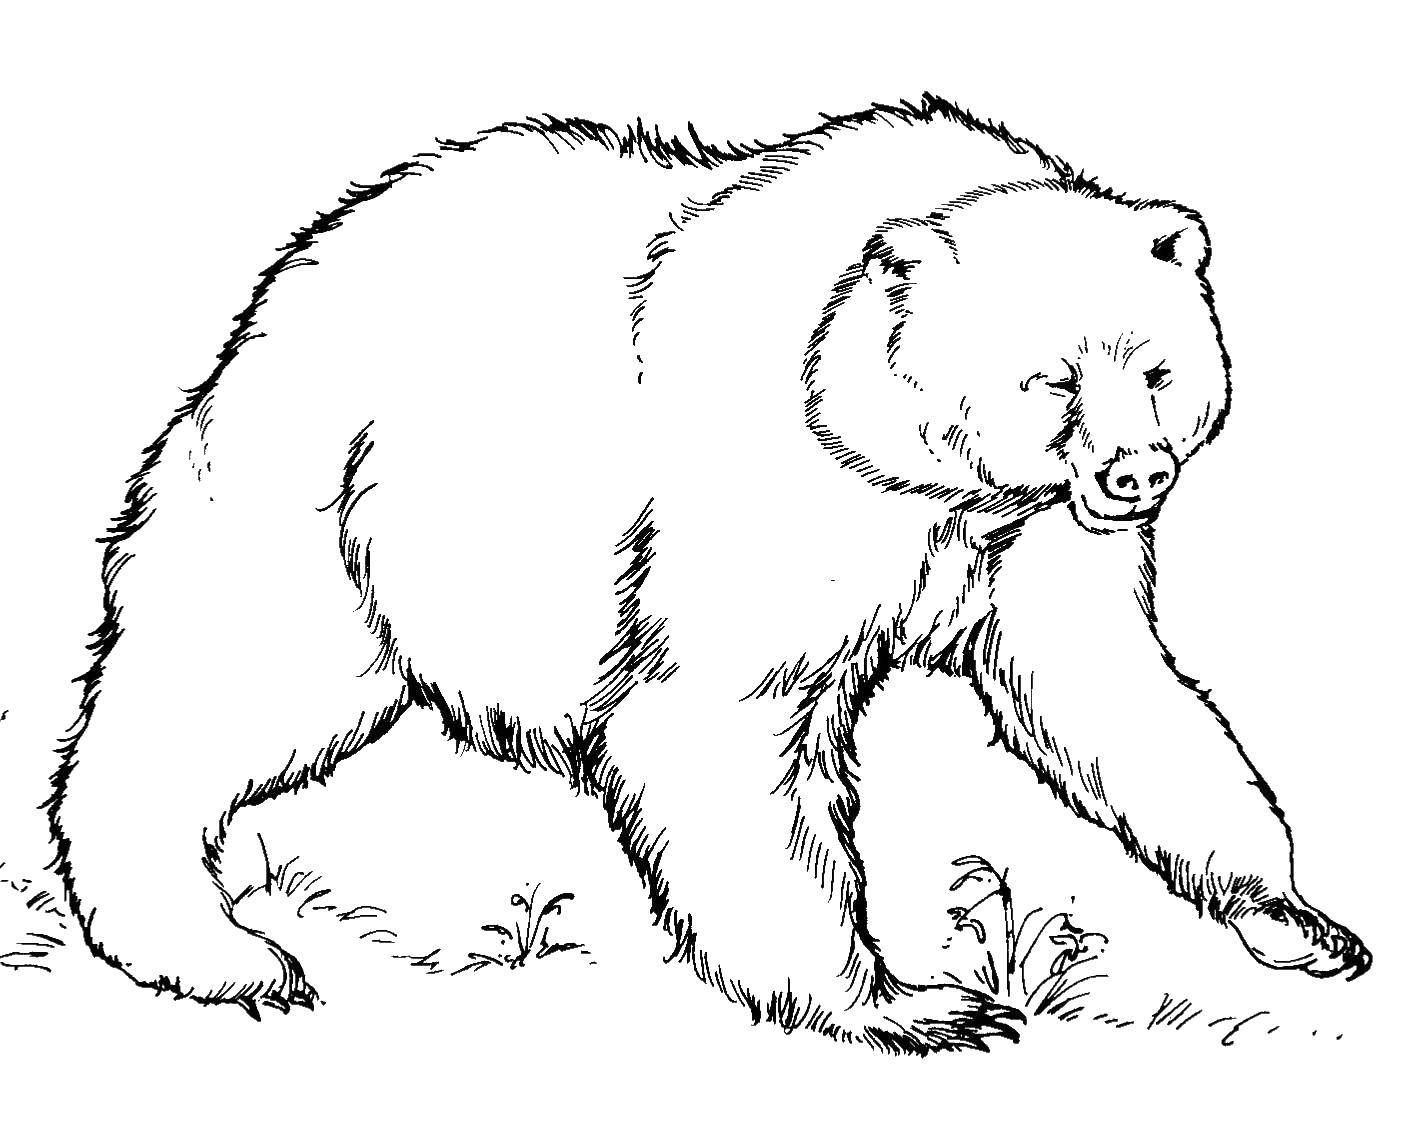 Coloring Bear. Category Animals. Tags:  bear.